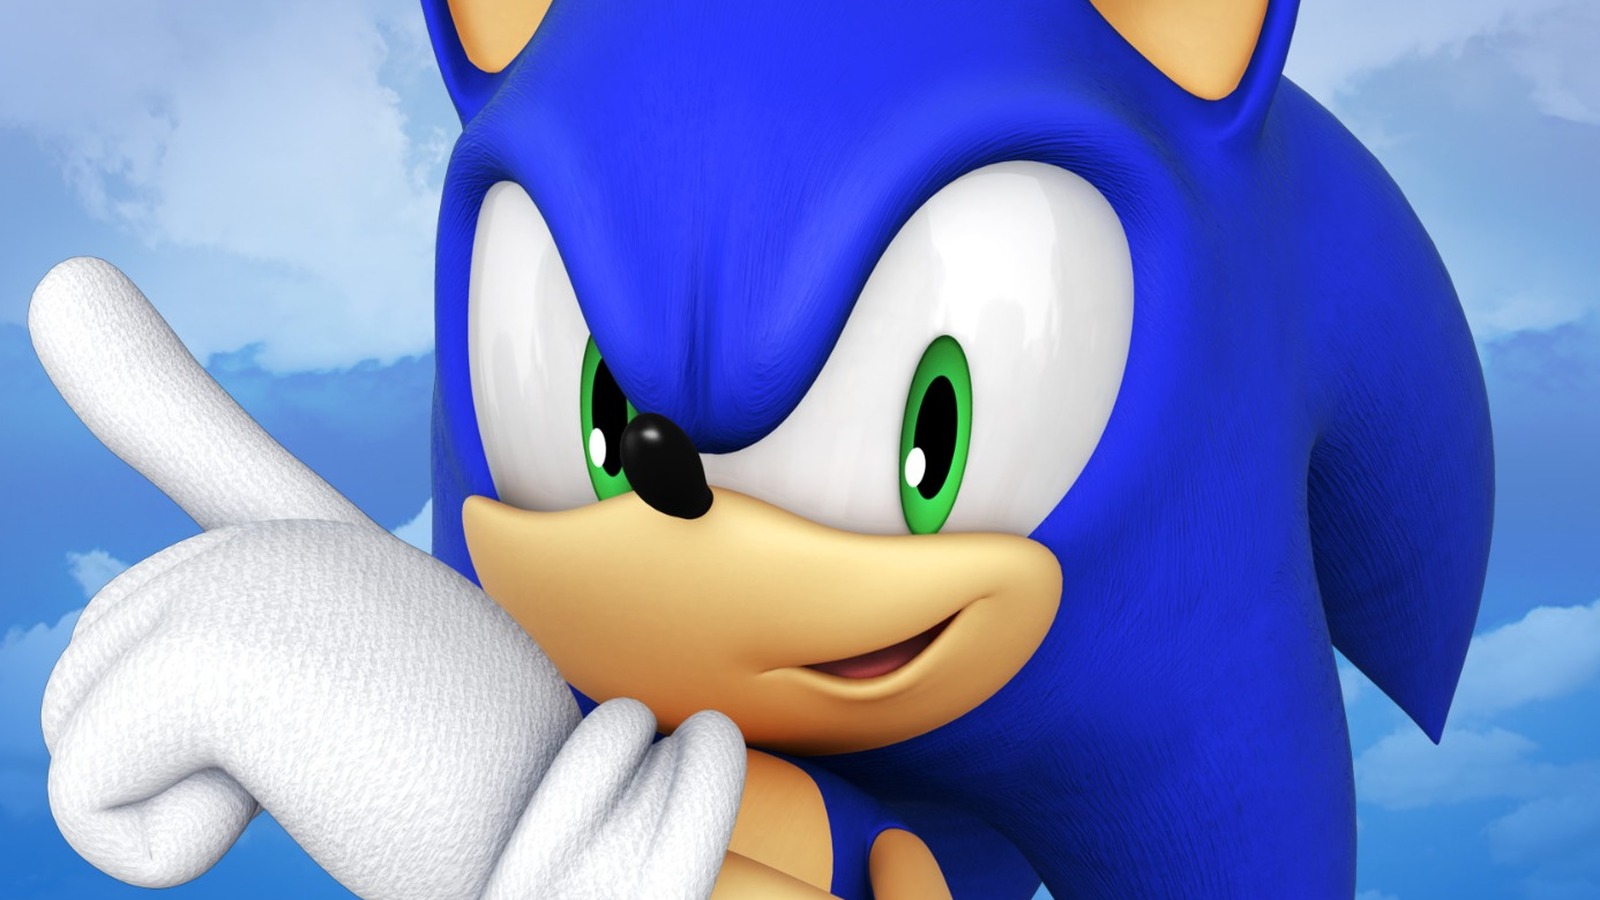 Sonic Origins: Plus Expansion Pack for Nintendo Switch - Nintendo